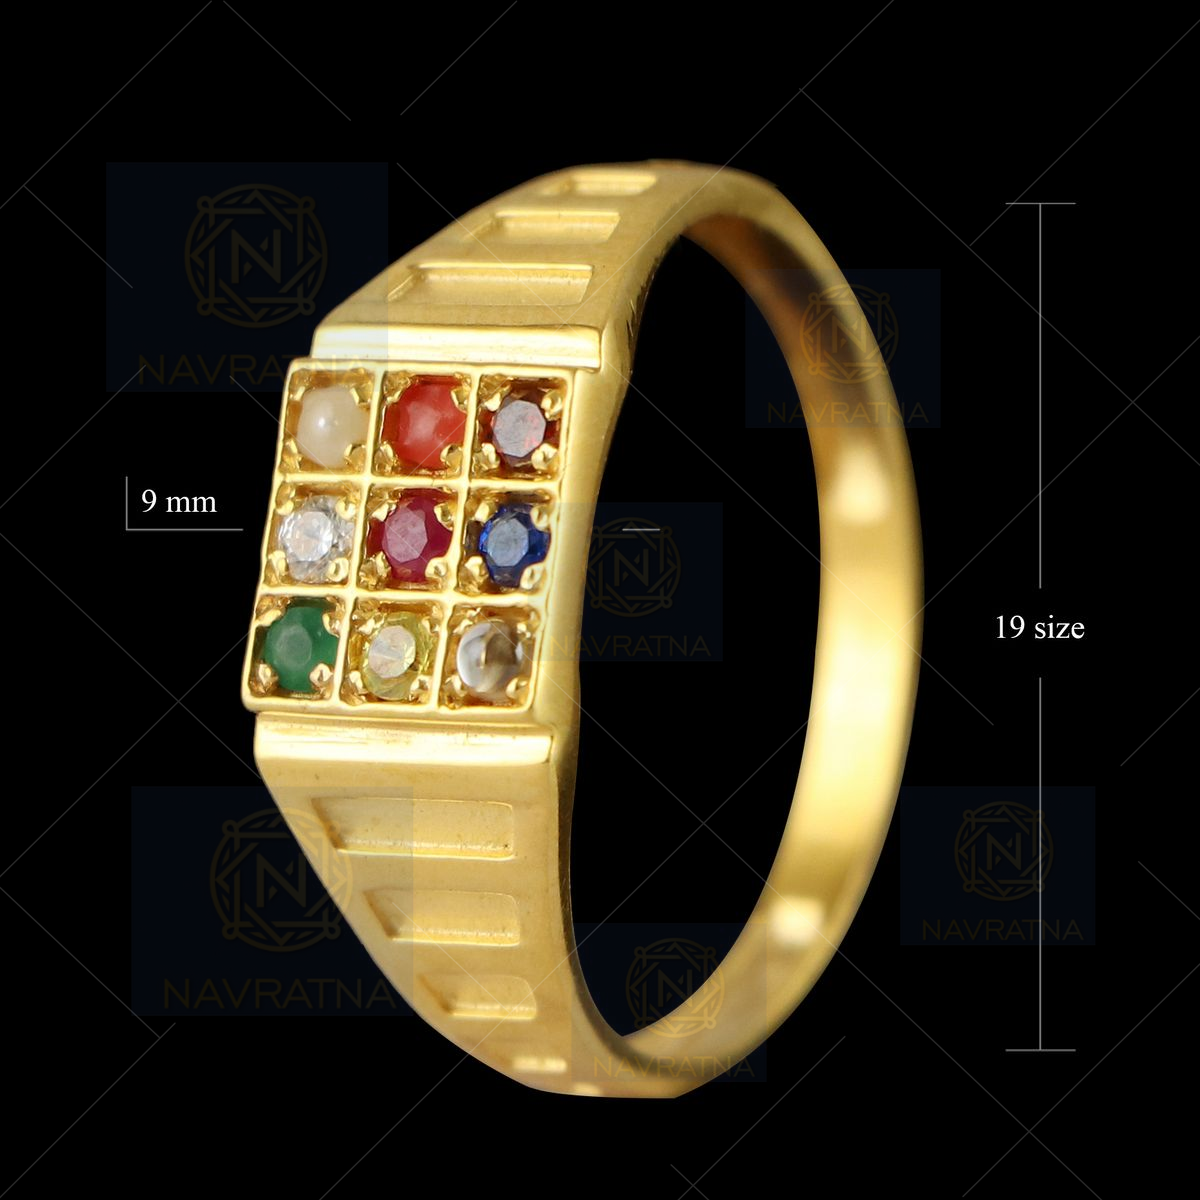 Latest Gold Navaratna Ring Designs With Weight |Navaratna Gold Rings Models  |By Gold Lakshmi Balaji - YouTube